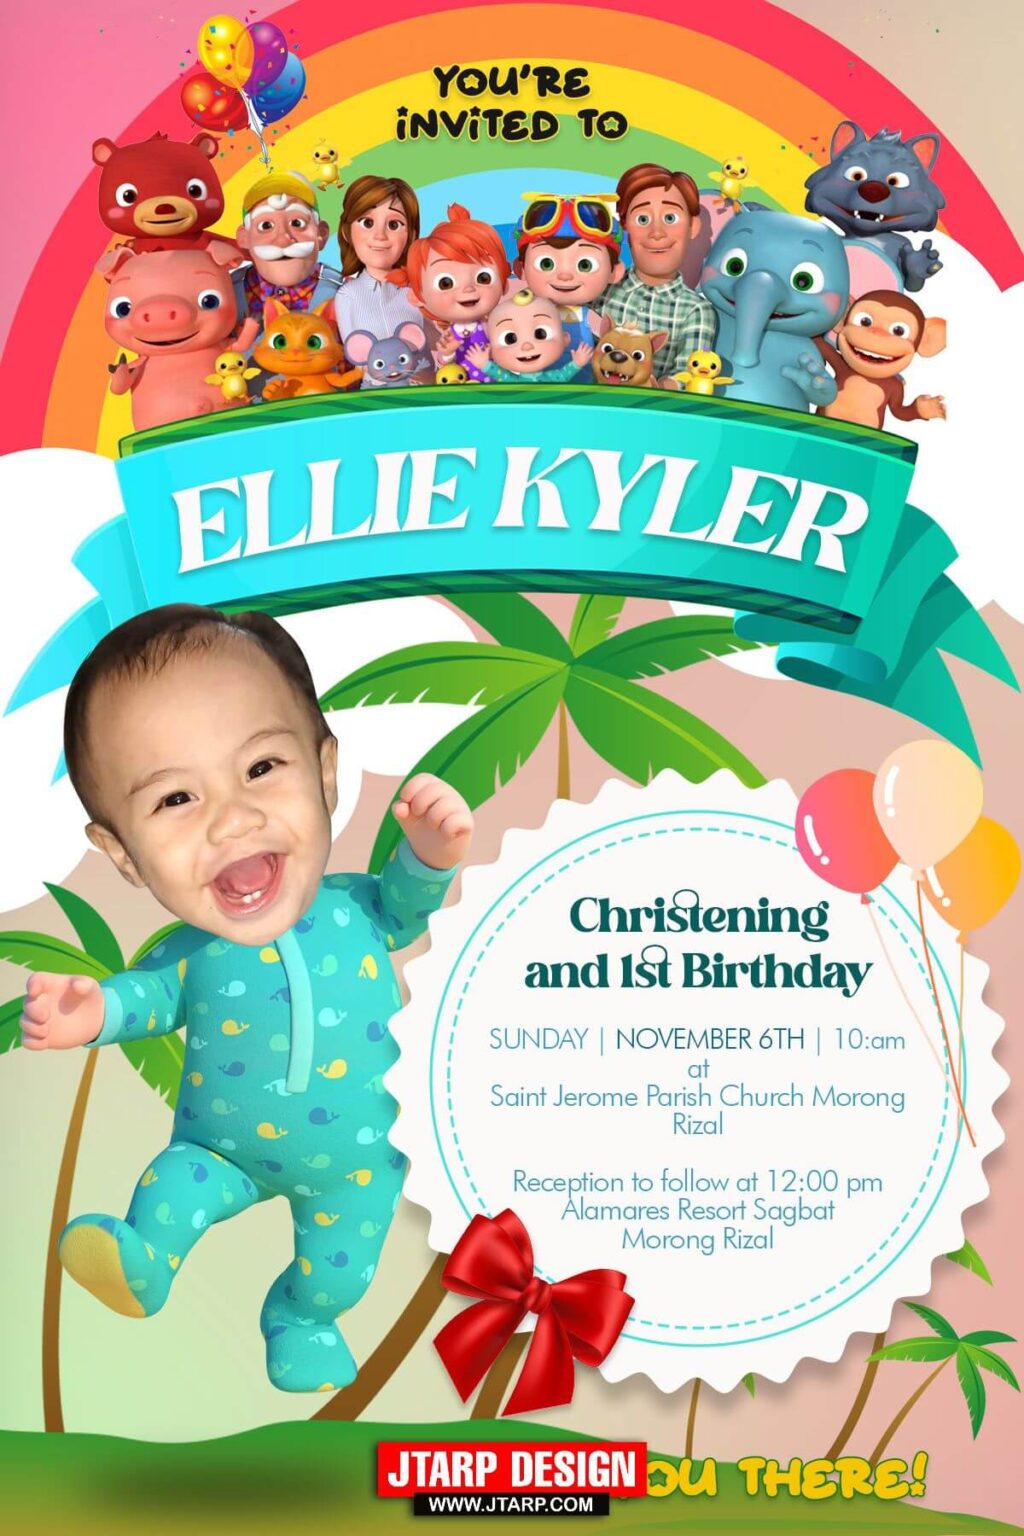 4R Christening and 1st birthday of Ellie Kyler Villaflor Cocomelon Invitation Design